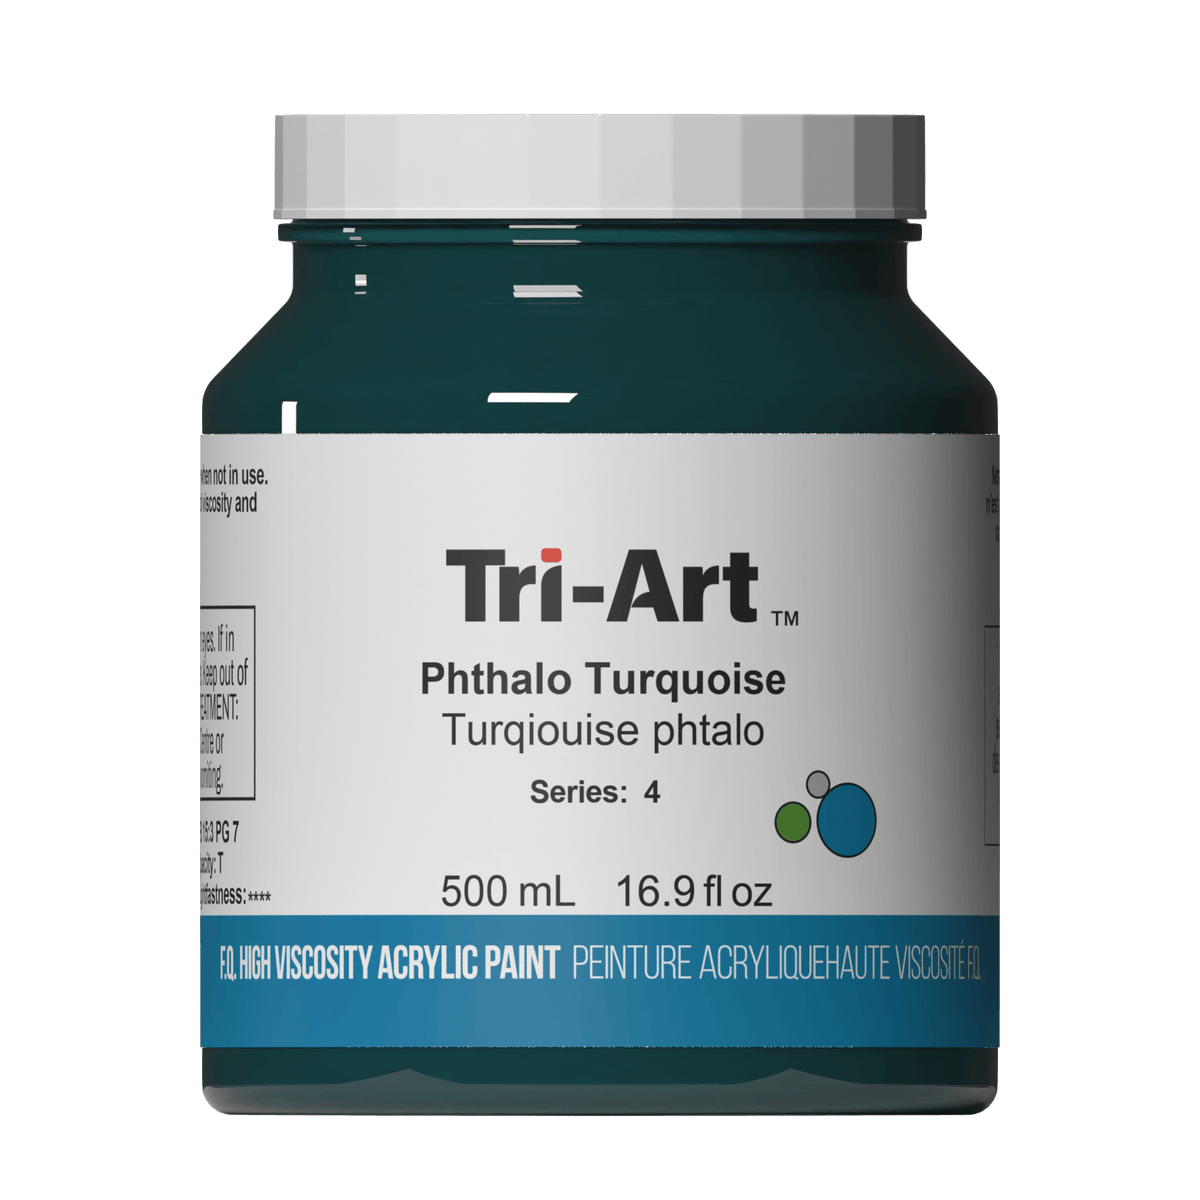 Tri-Art High Viscosity - Phthalo Turquoise - Tri-Art Mfg.